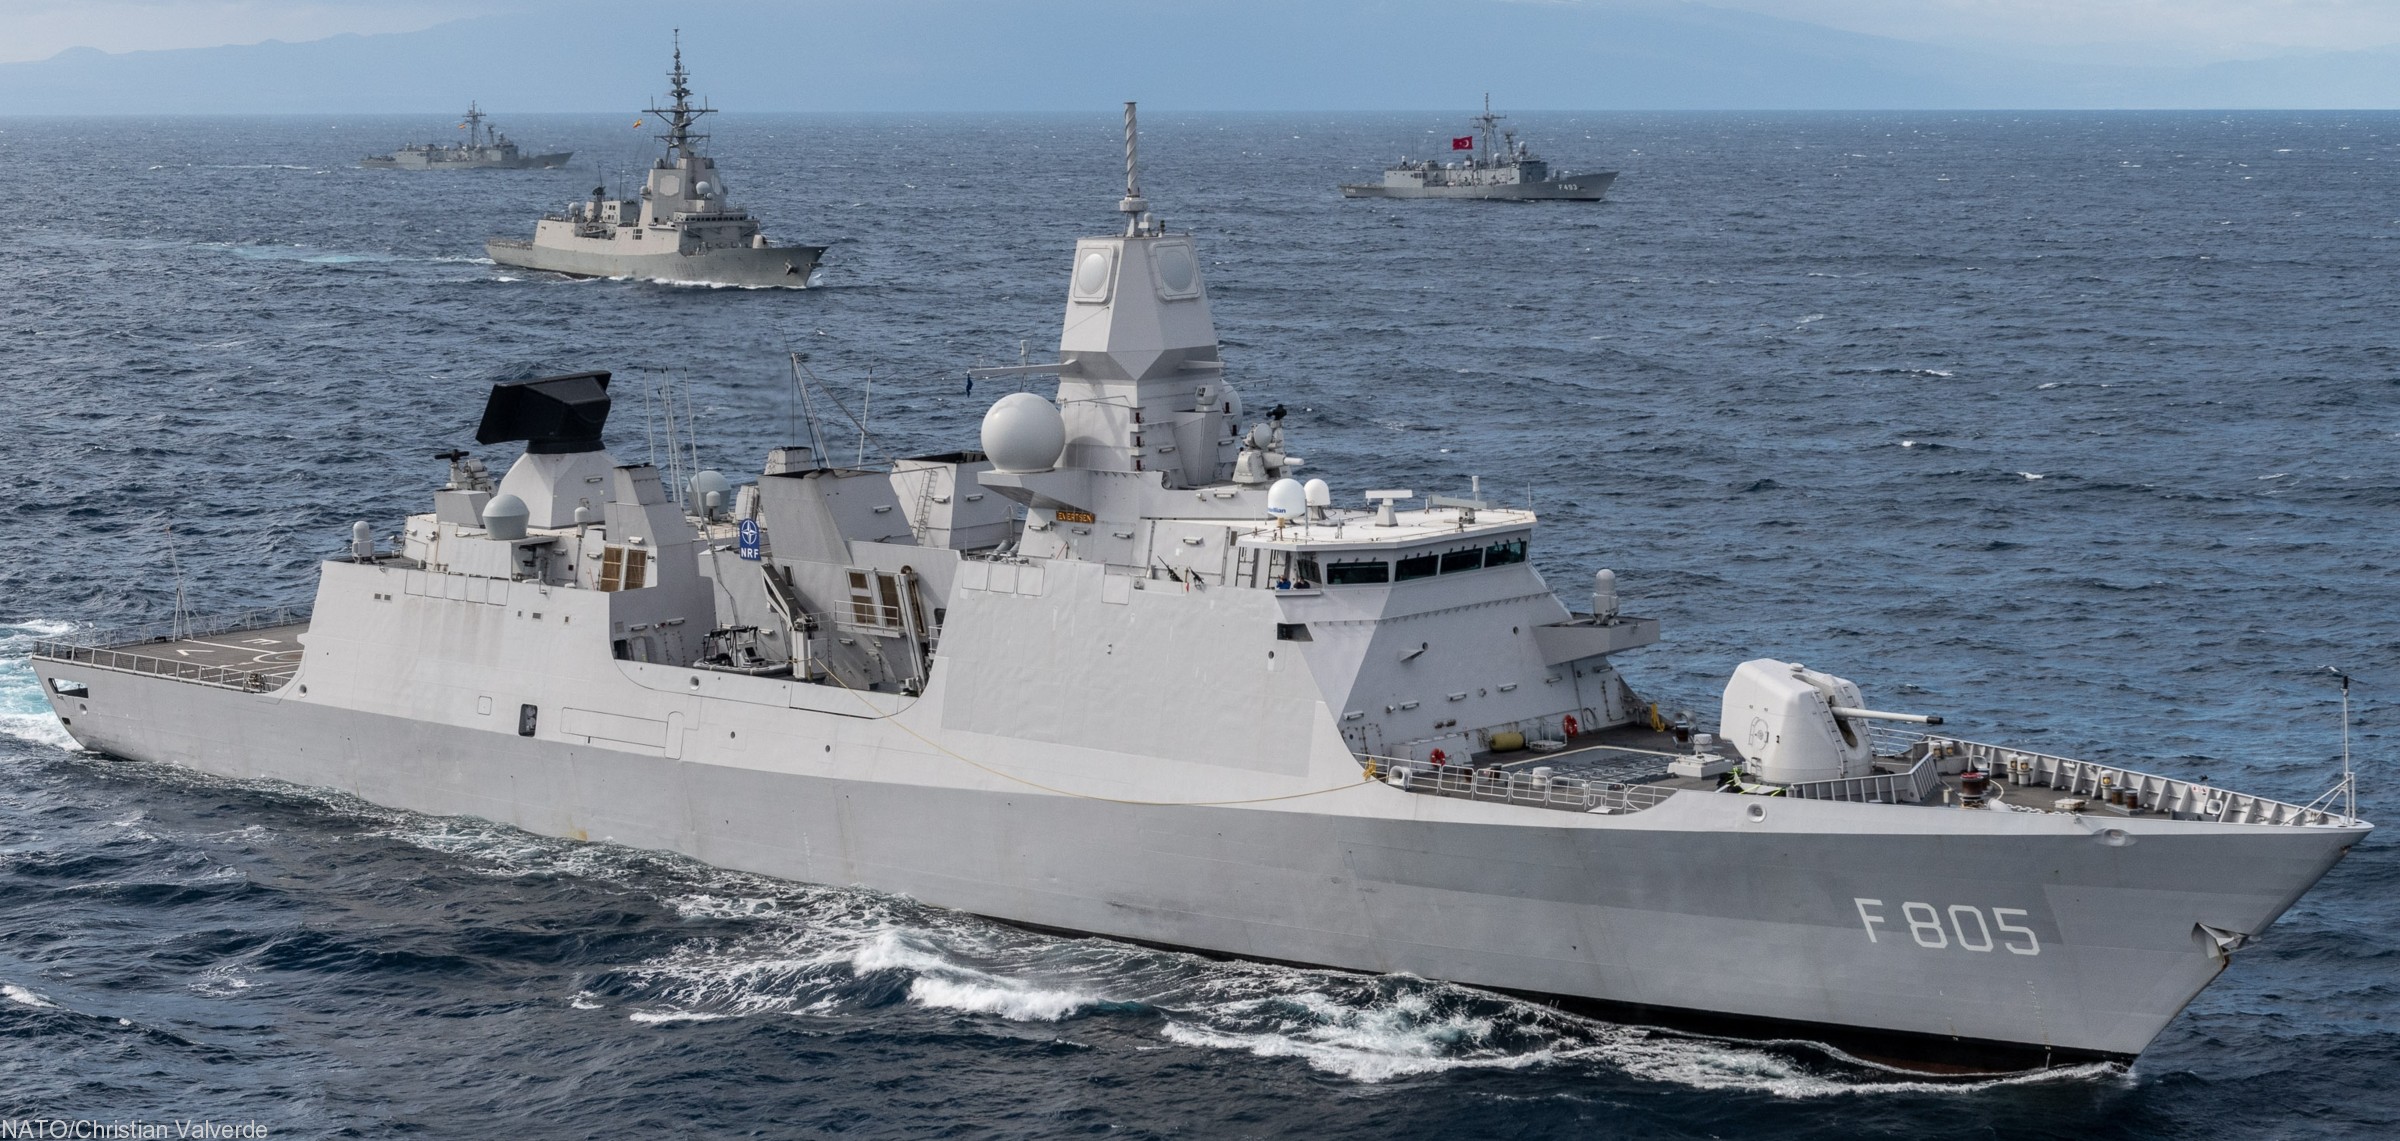 f-805 hnlms evertsen guided missile frigate ffg lcf royal netherlands navy 16